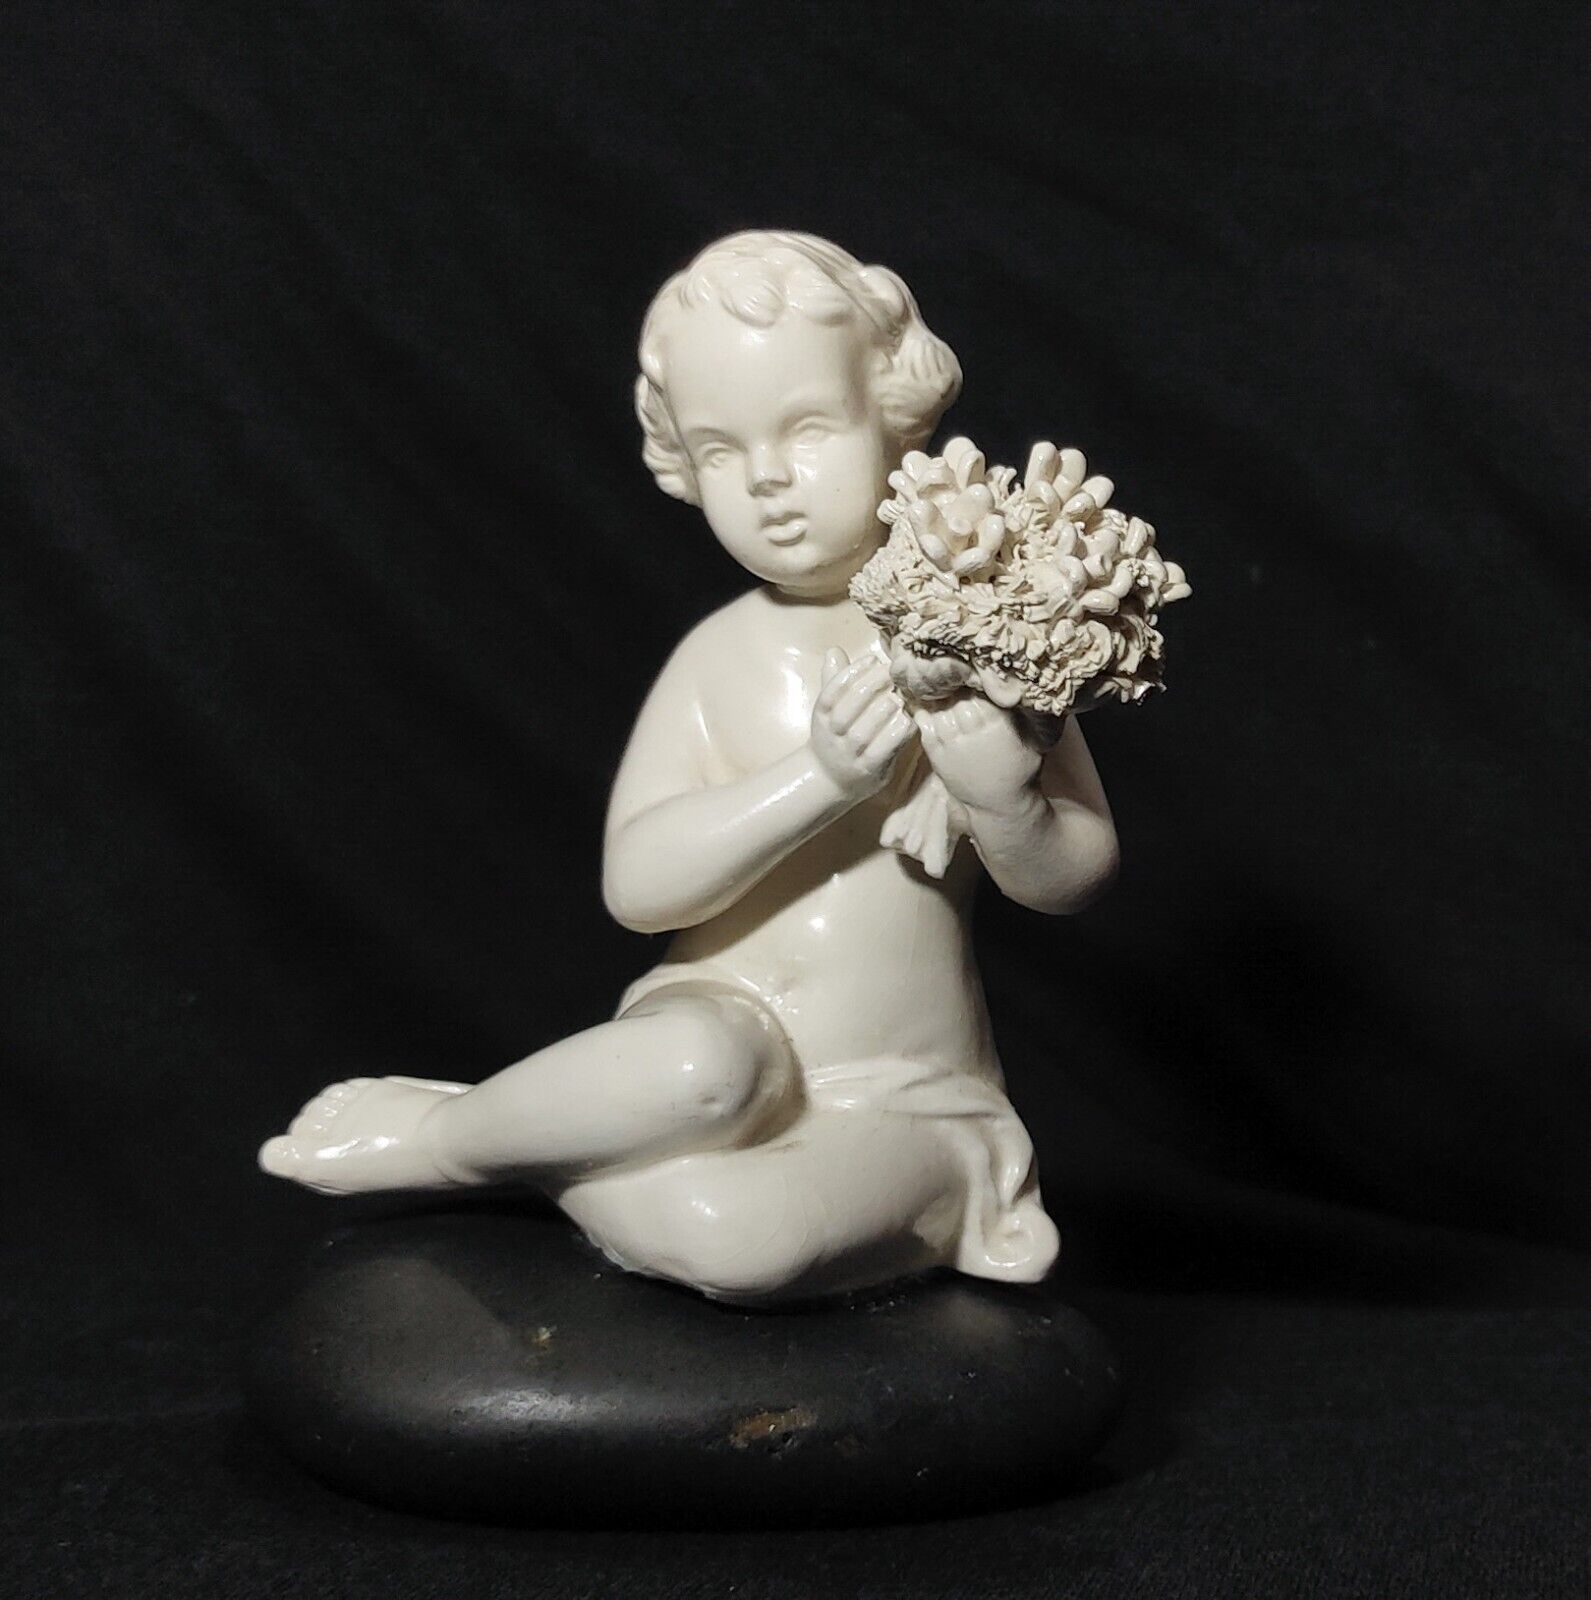 Girl W/ Flowers Sits on a Black Rock, Vintage White Matte Porcelain Figurine